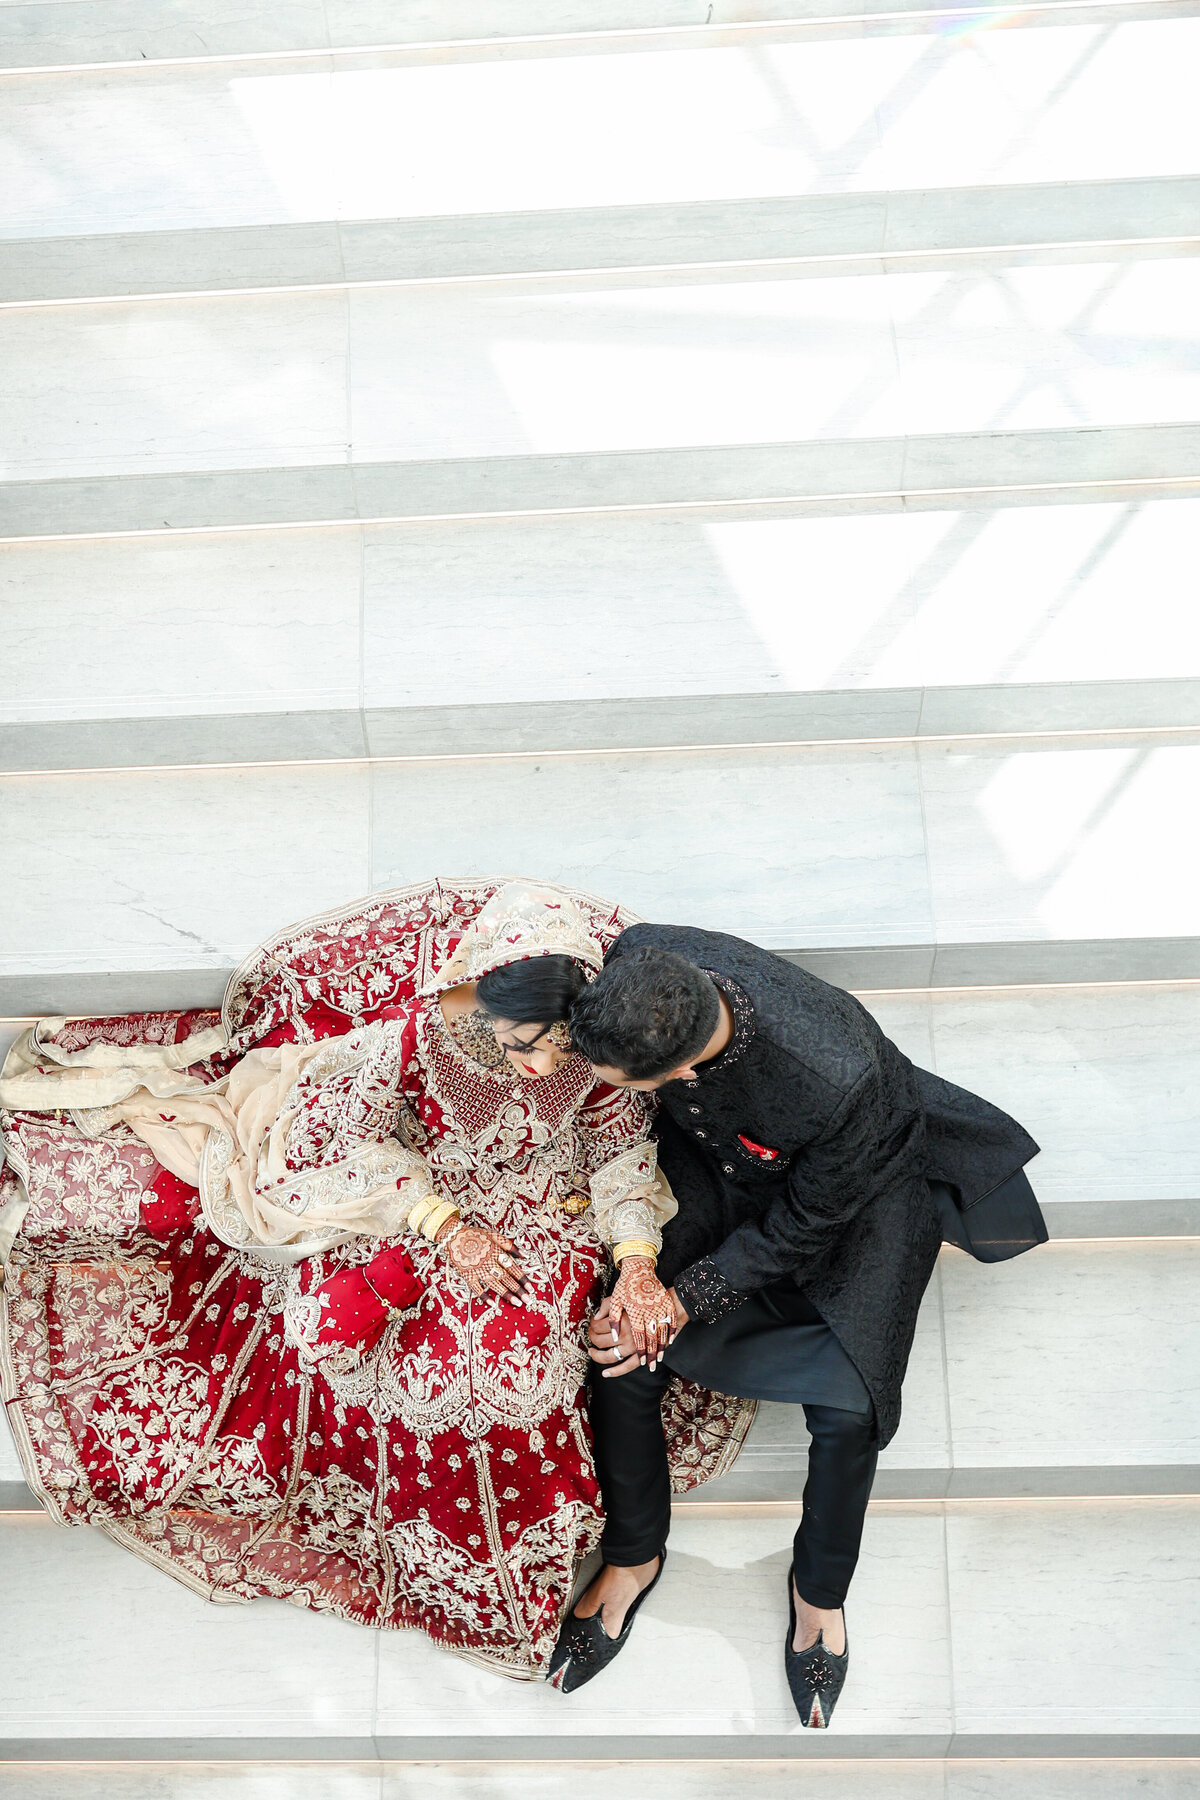 South Asian Indian Sikh Wedding Photographer in Kansas City